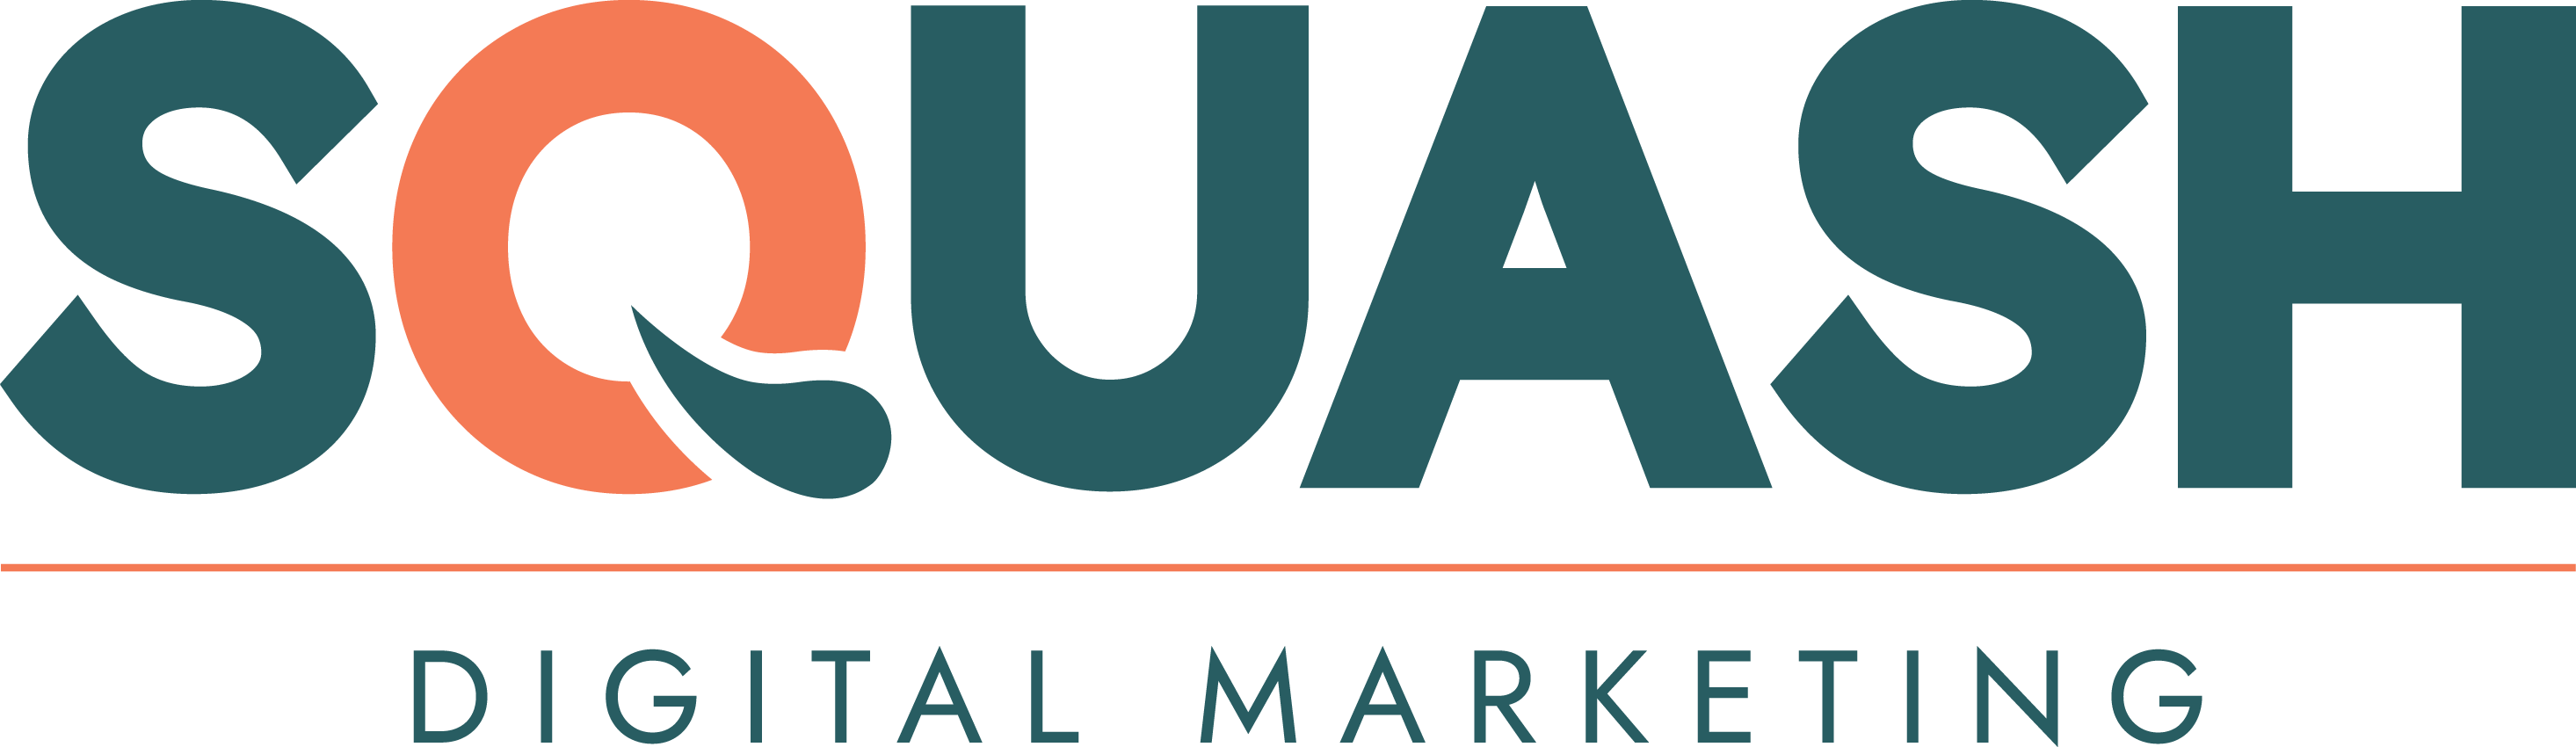 Squash Digital Marketing Logo